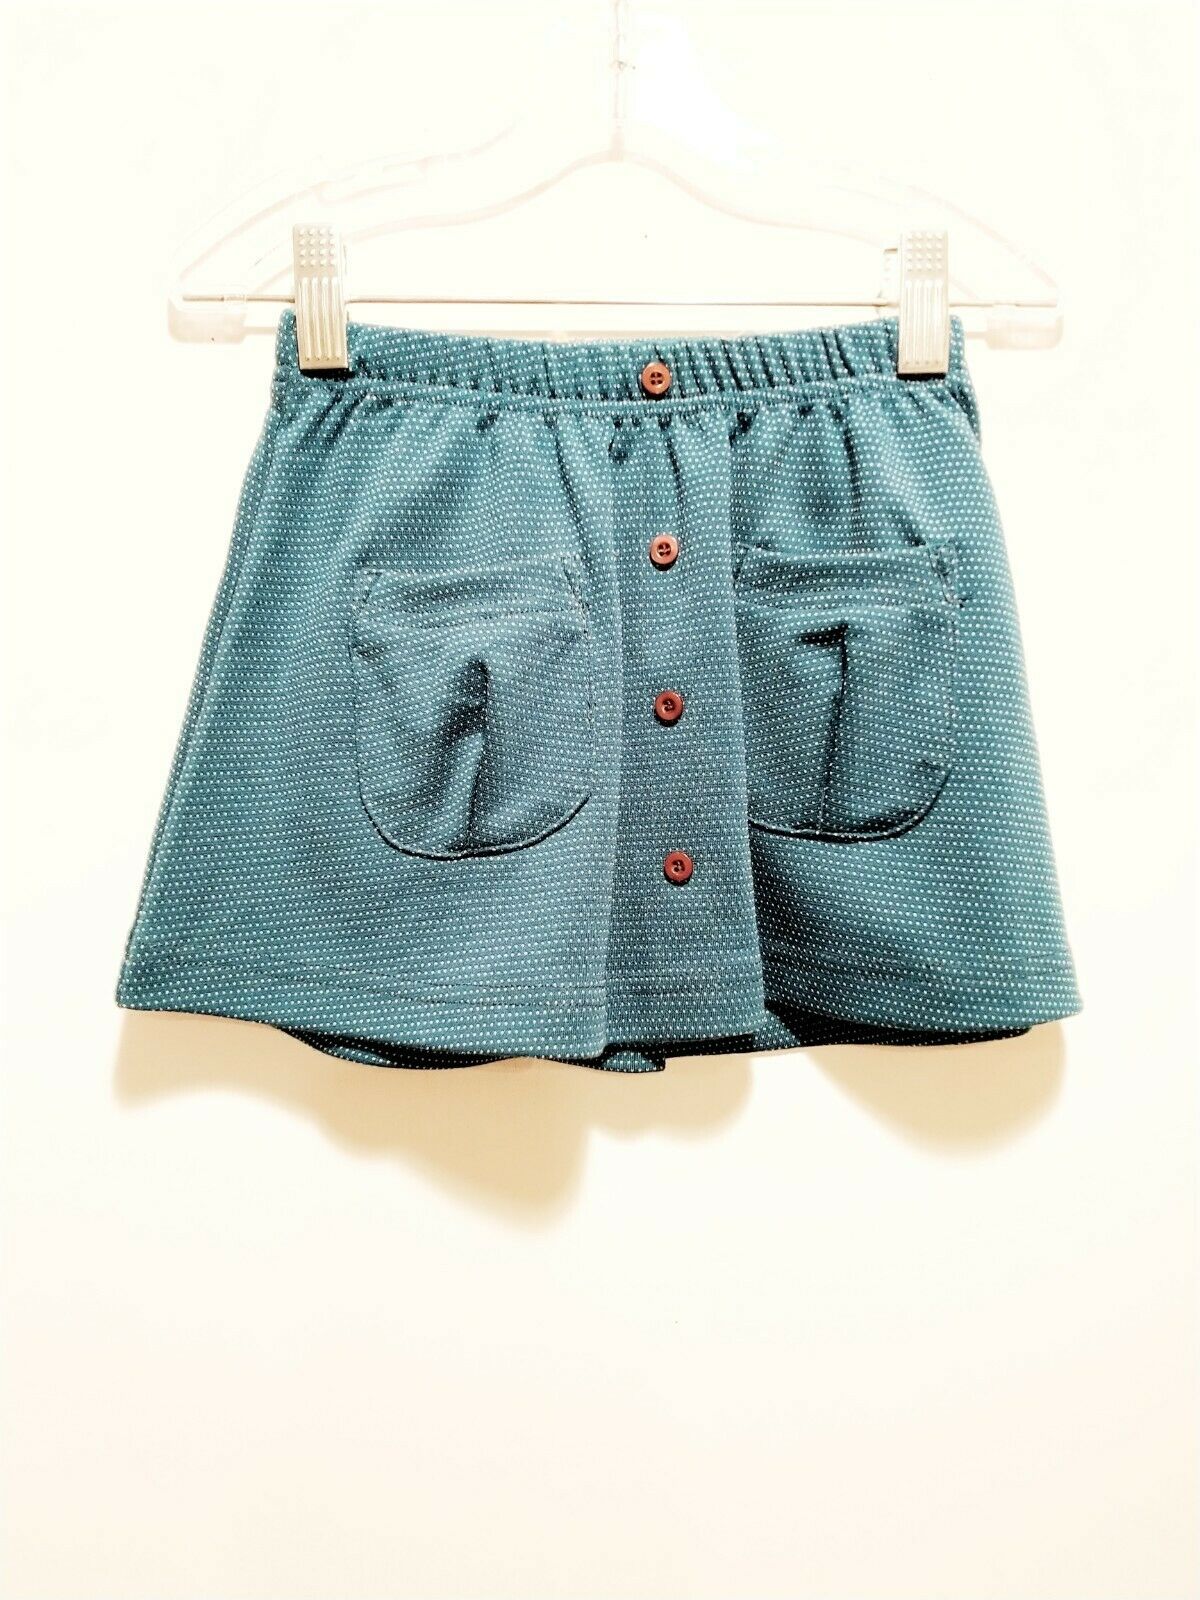 Skirts Midi Sizes 2, 3, 5, 6, 6X, 7, 8 by Crew Kids Brand Blue Polka Dots NEW